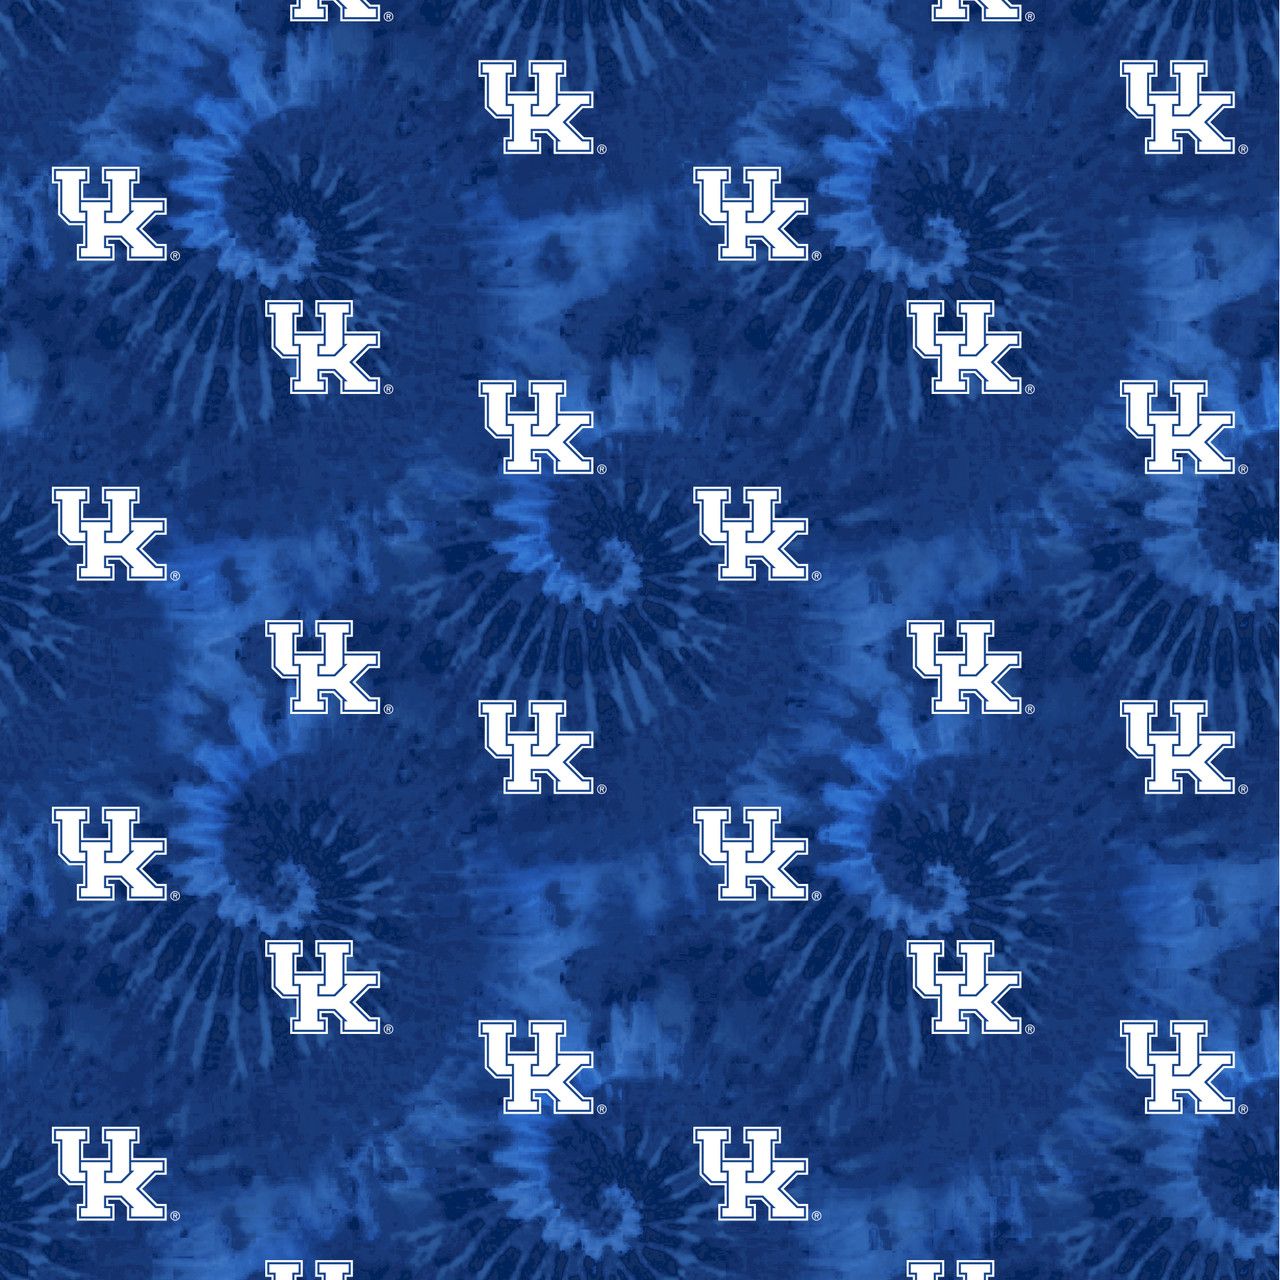 University of Kentucky Wildcats Cotton Fabric with Tye Dye Print or Matching Solid Cotton Fabrics